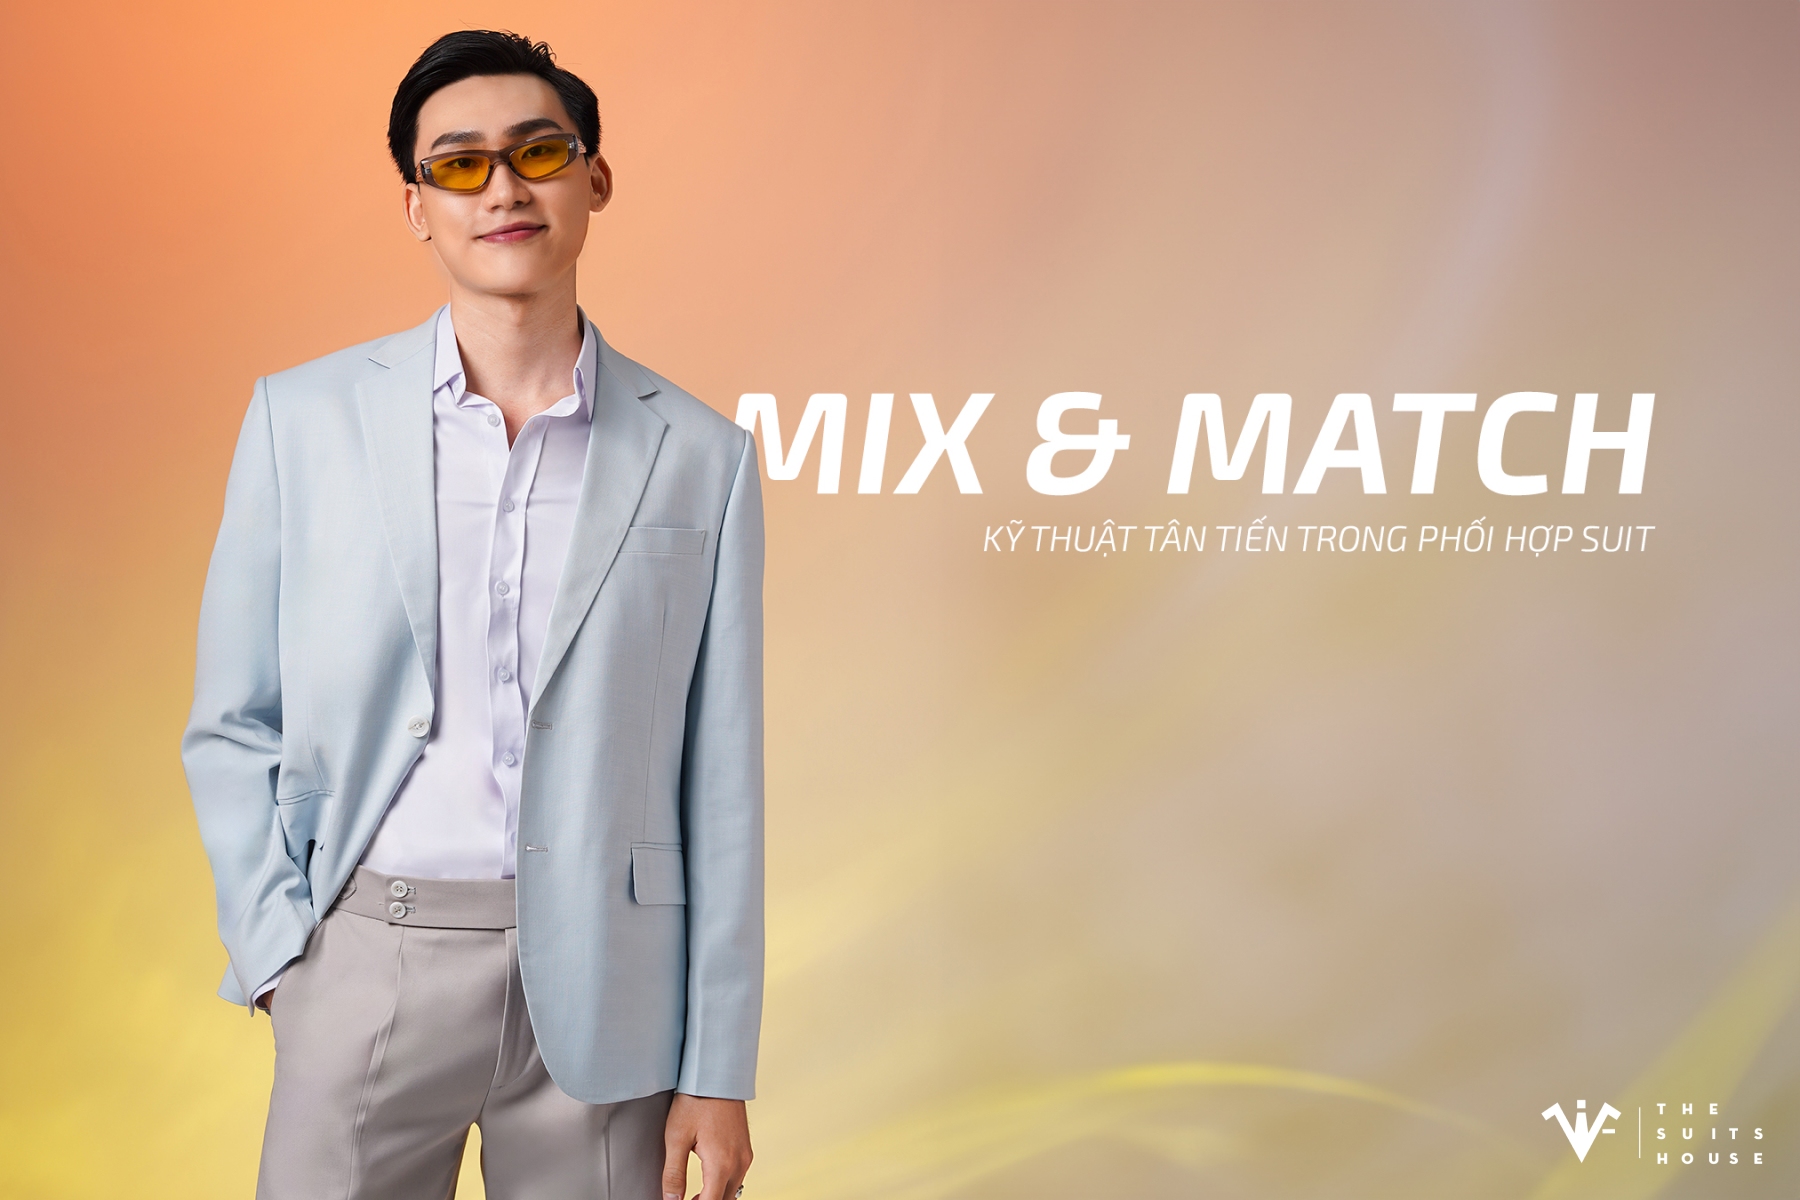 Mix and Match: Kỹ Thuật Tân Tiến Trong Phối Hợp Suit